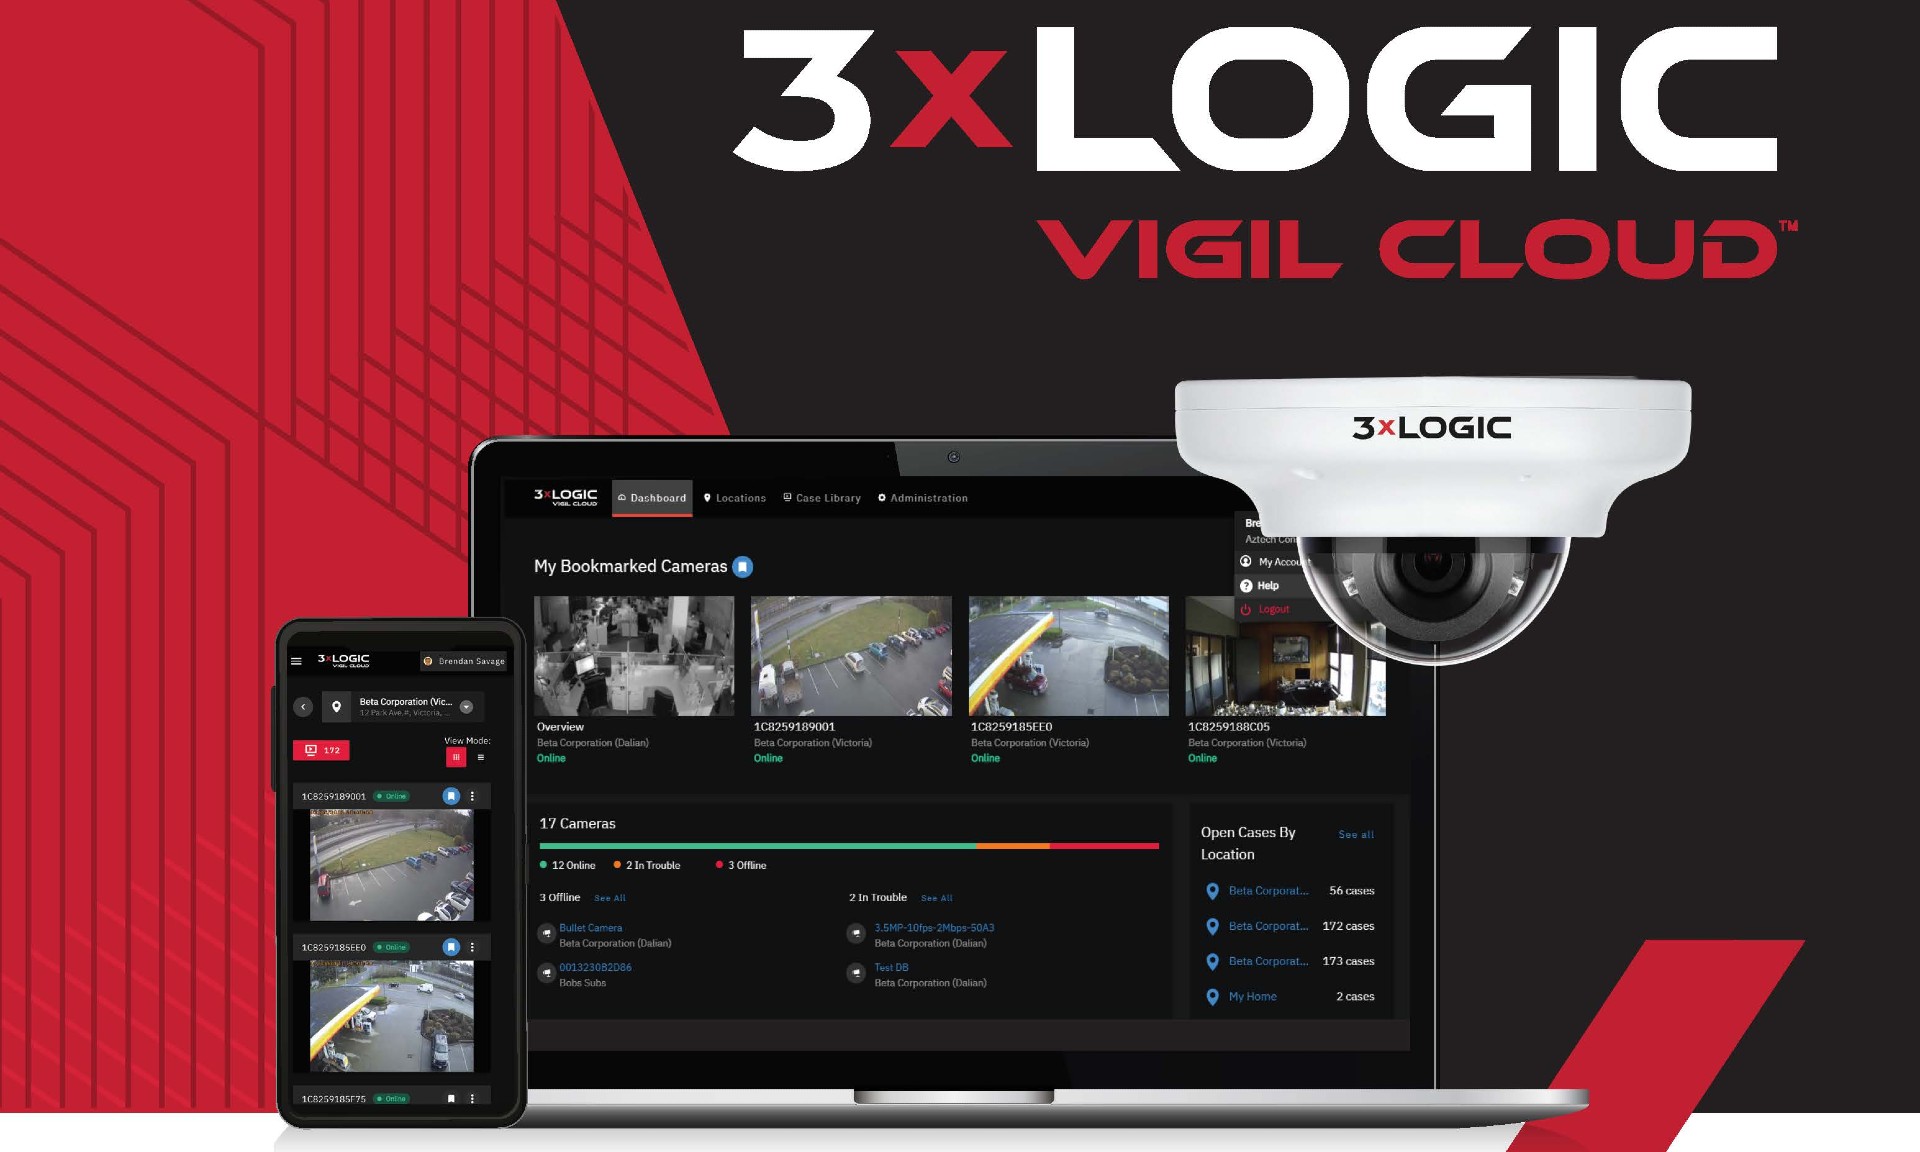 3xLOGIC announces launch of VIGIL CLOUD in Europe